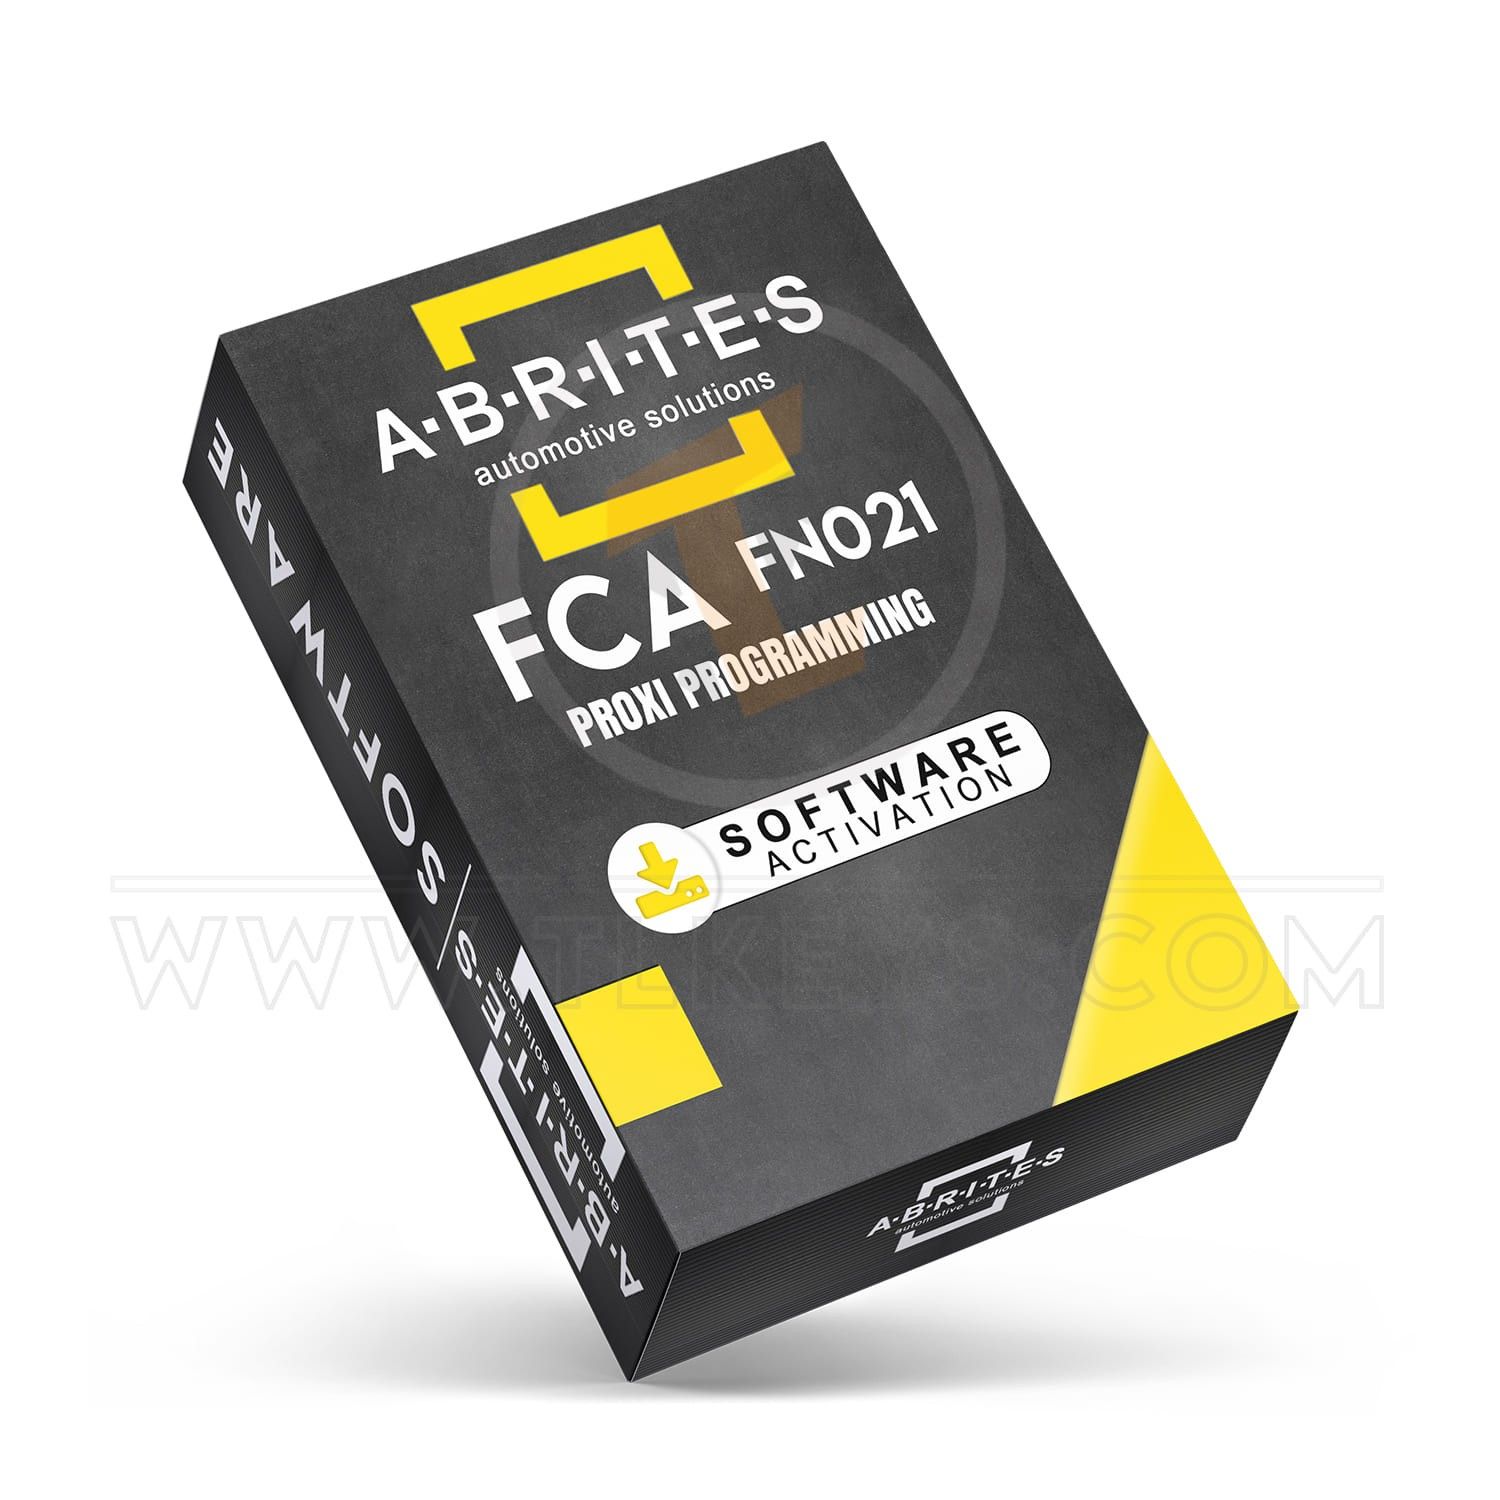 Abrites FN021 FCA PROXI PROGRAMMING software